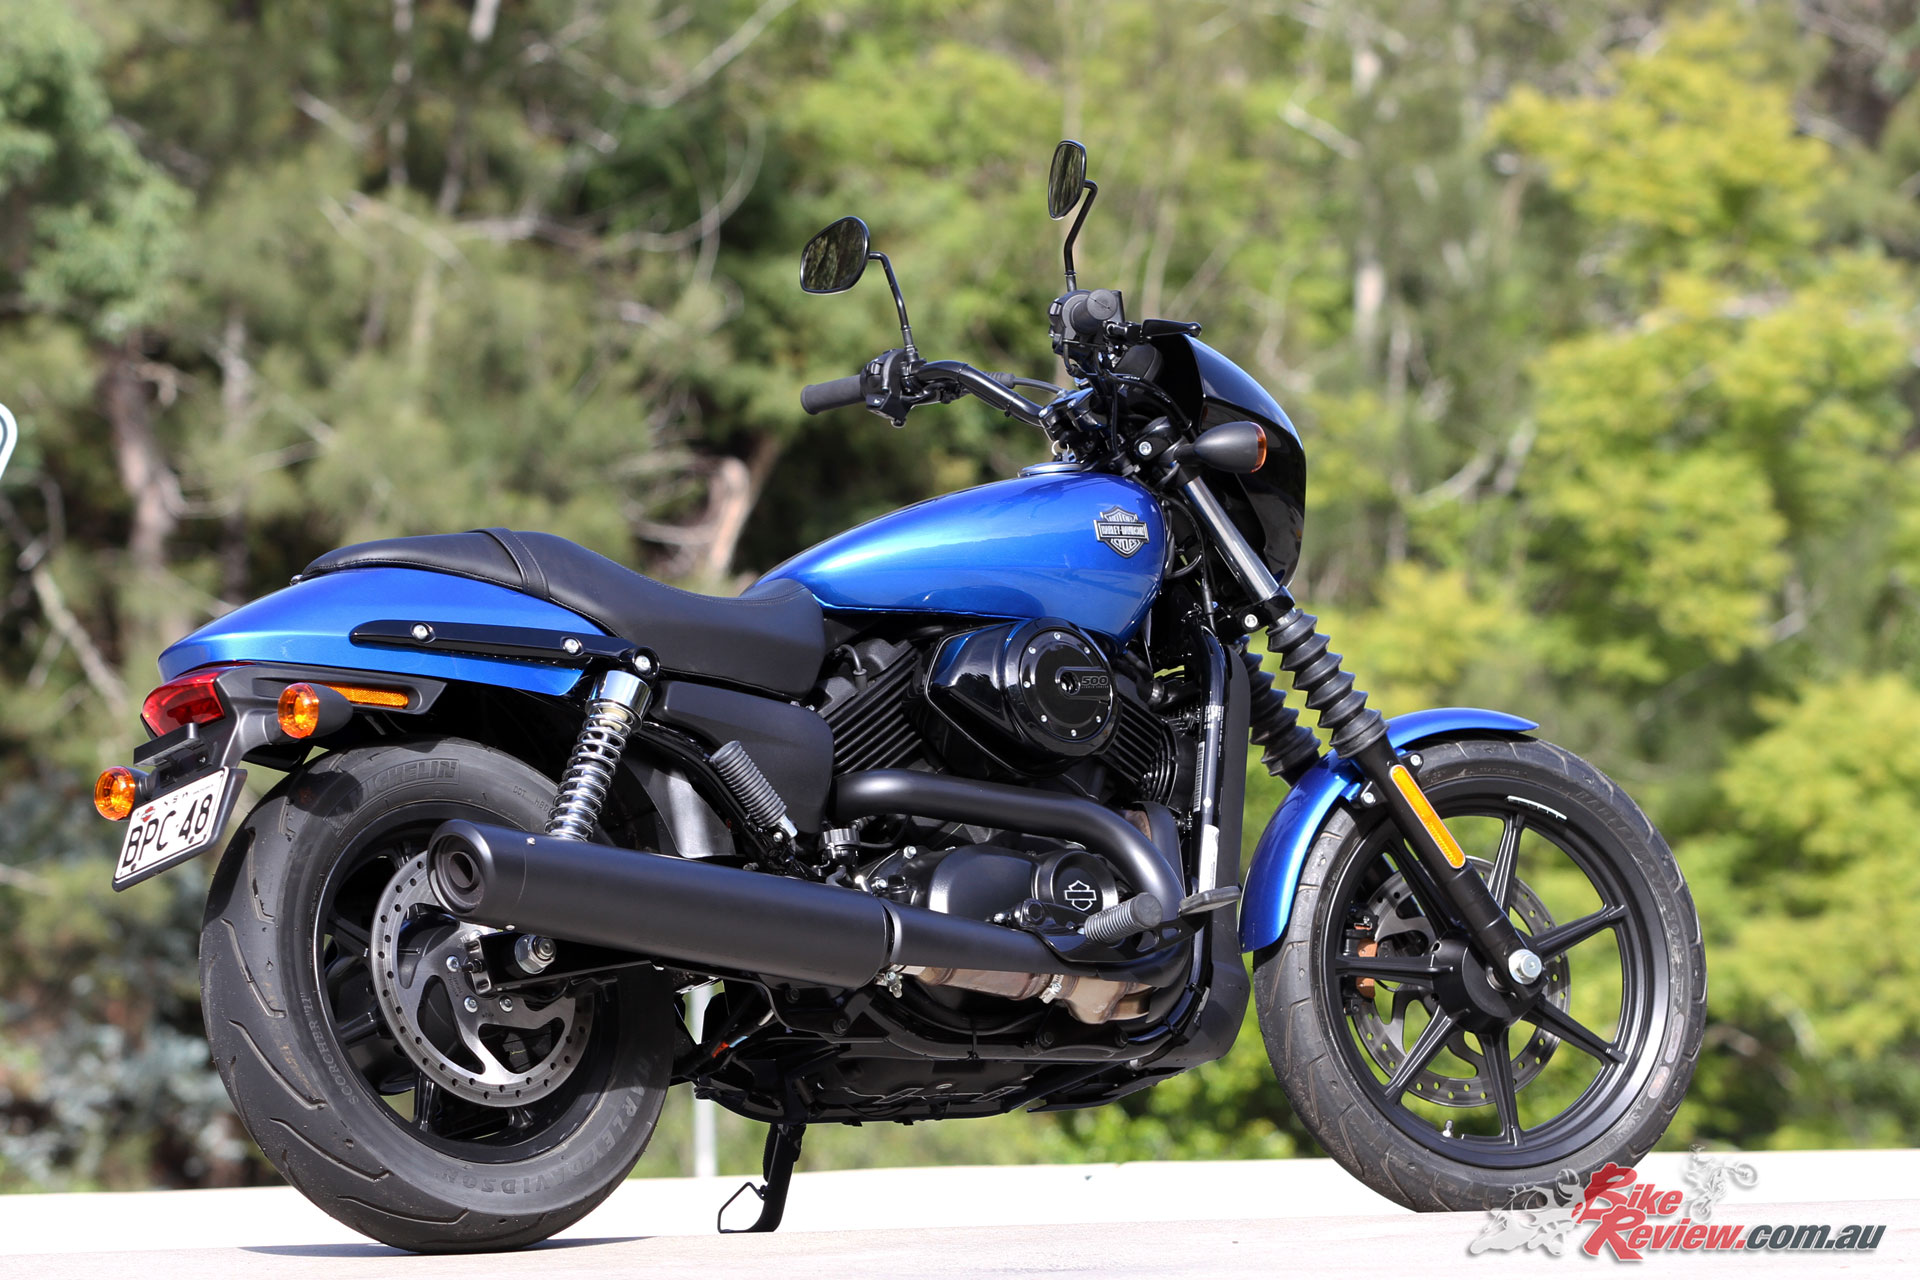 Harley Xg500 Specs Promotion Off69